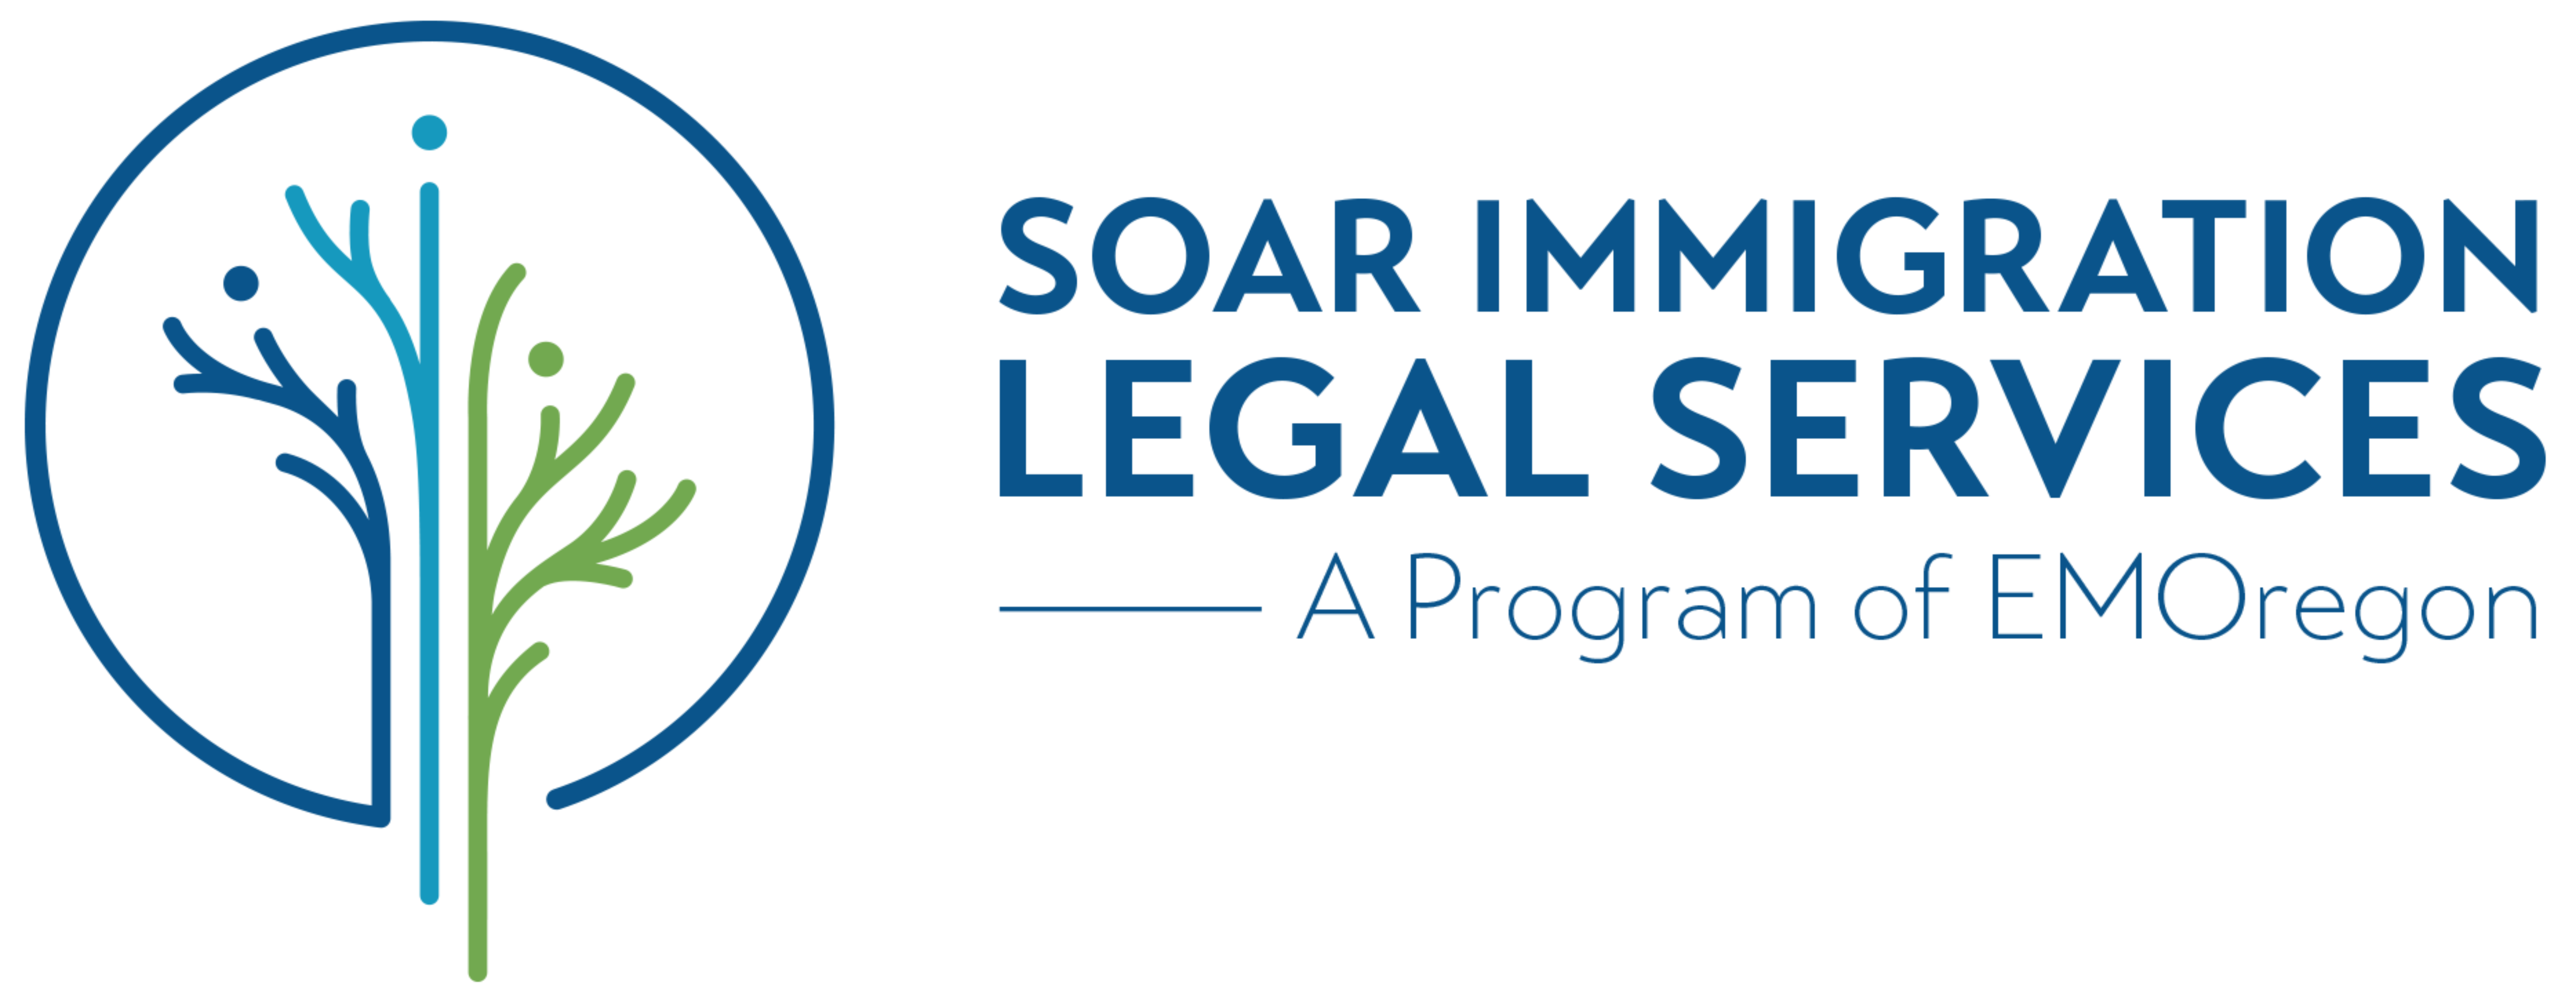 SOAR Immigration Legal Services